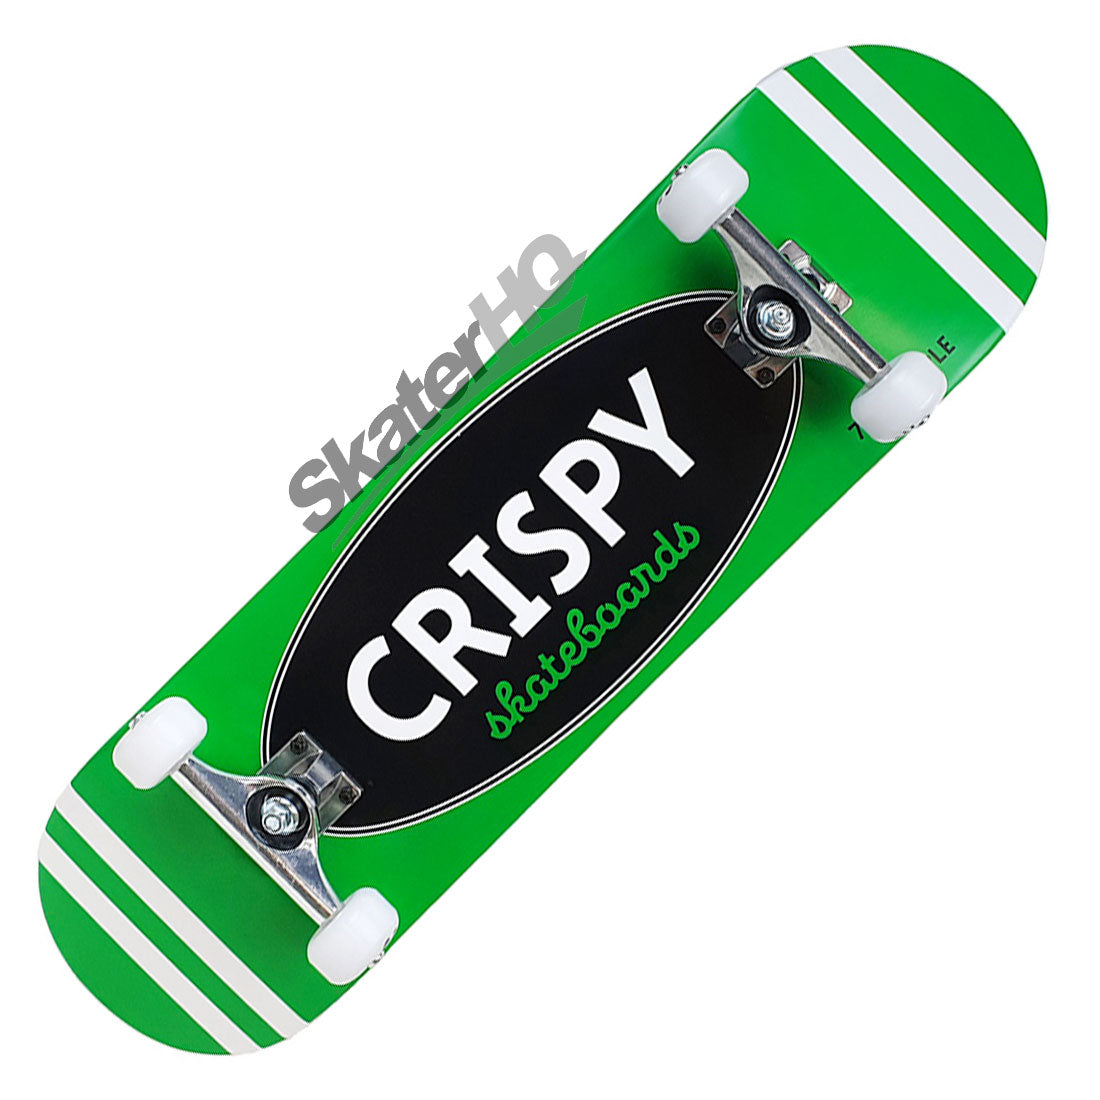 Crispy Rookie Stripes 8.25 Complete - Green Skateboard Completes Modern Street